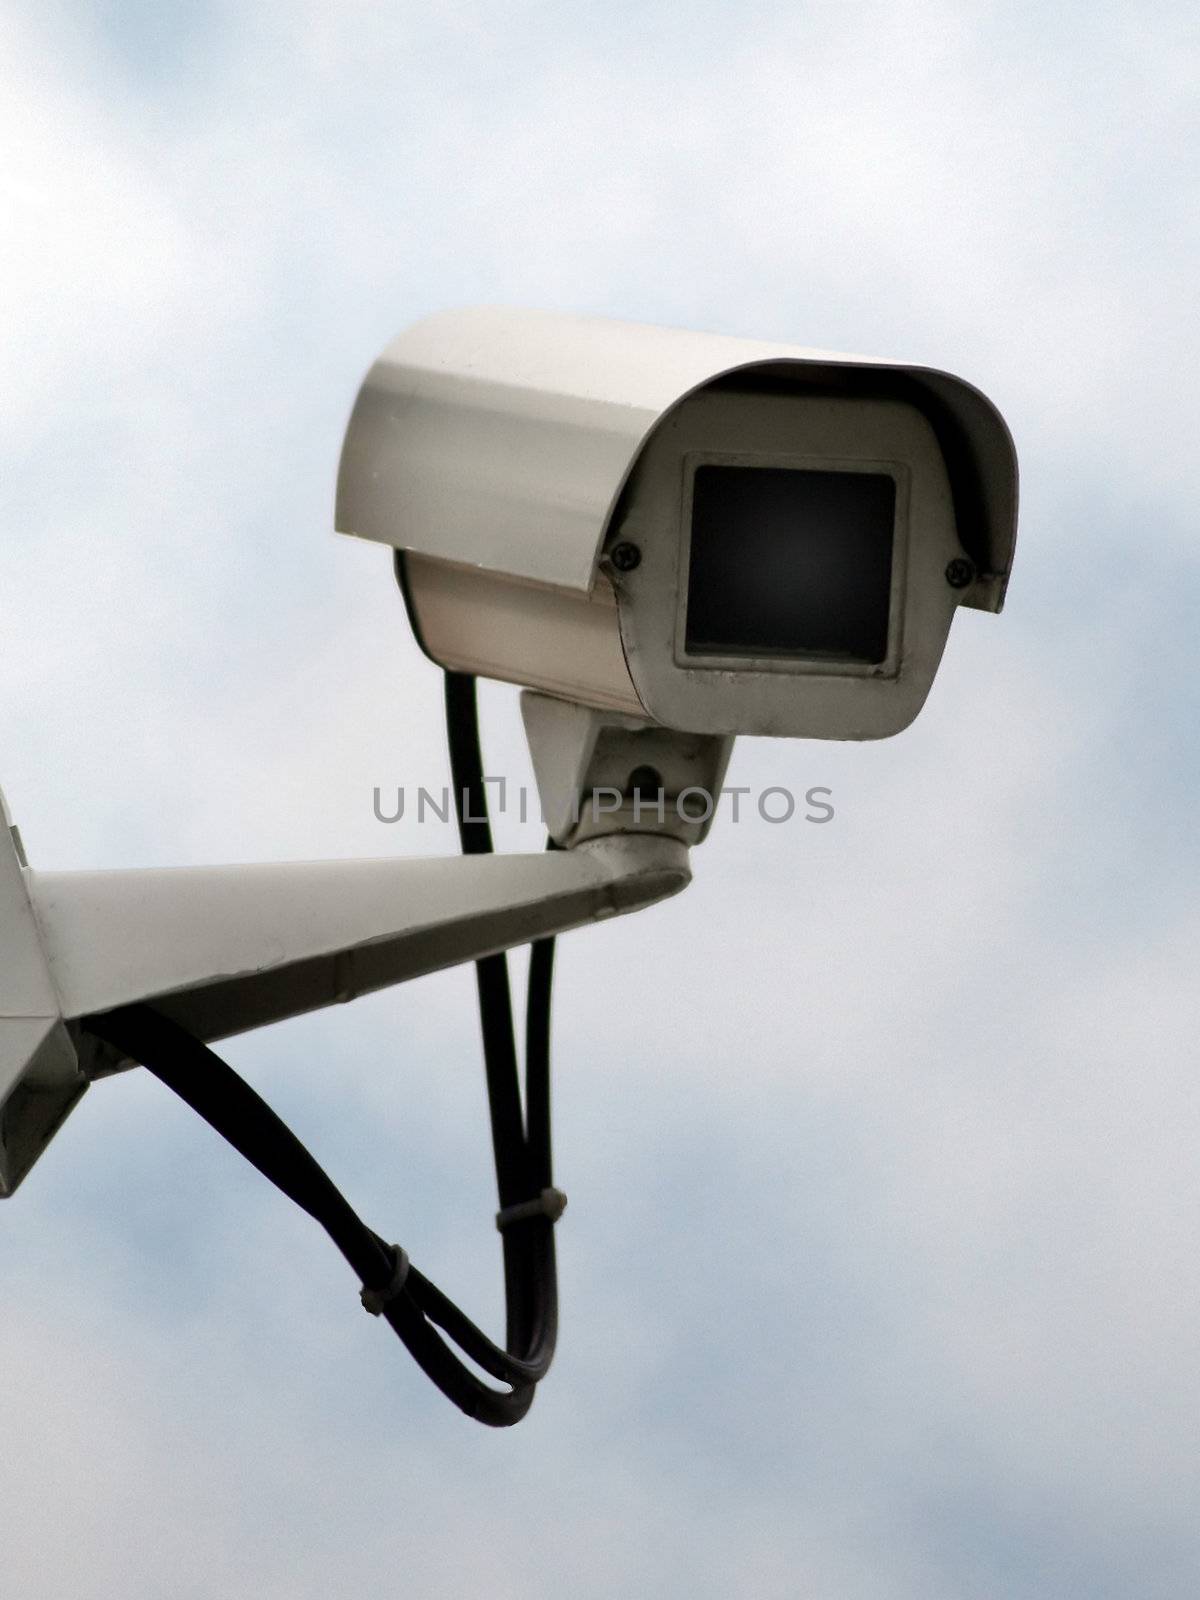 Cctv security camera on a blue sky background- deliberately stark image